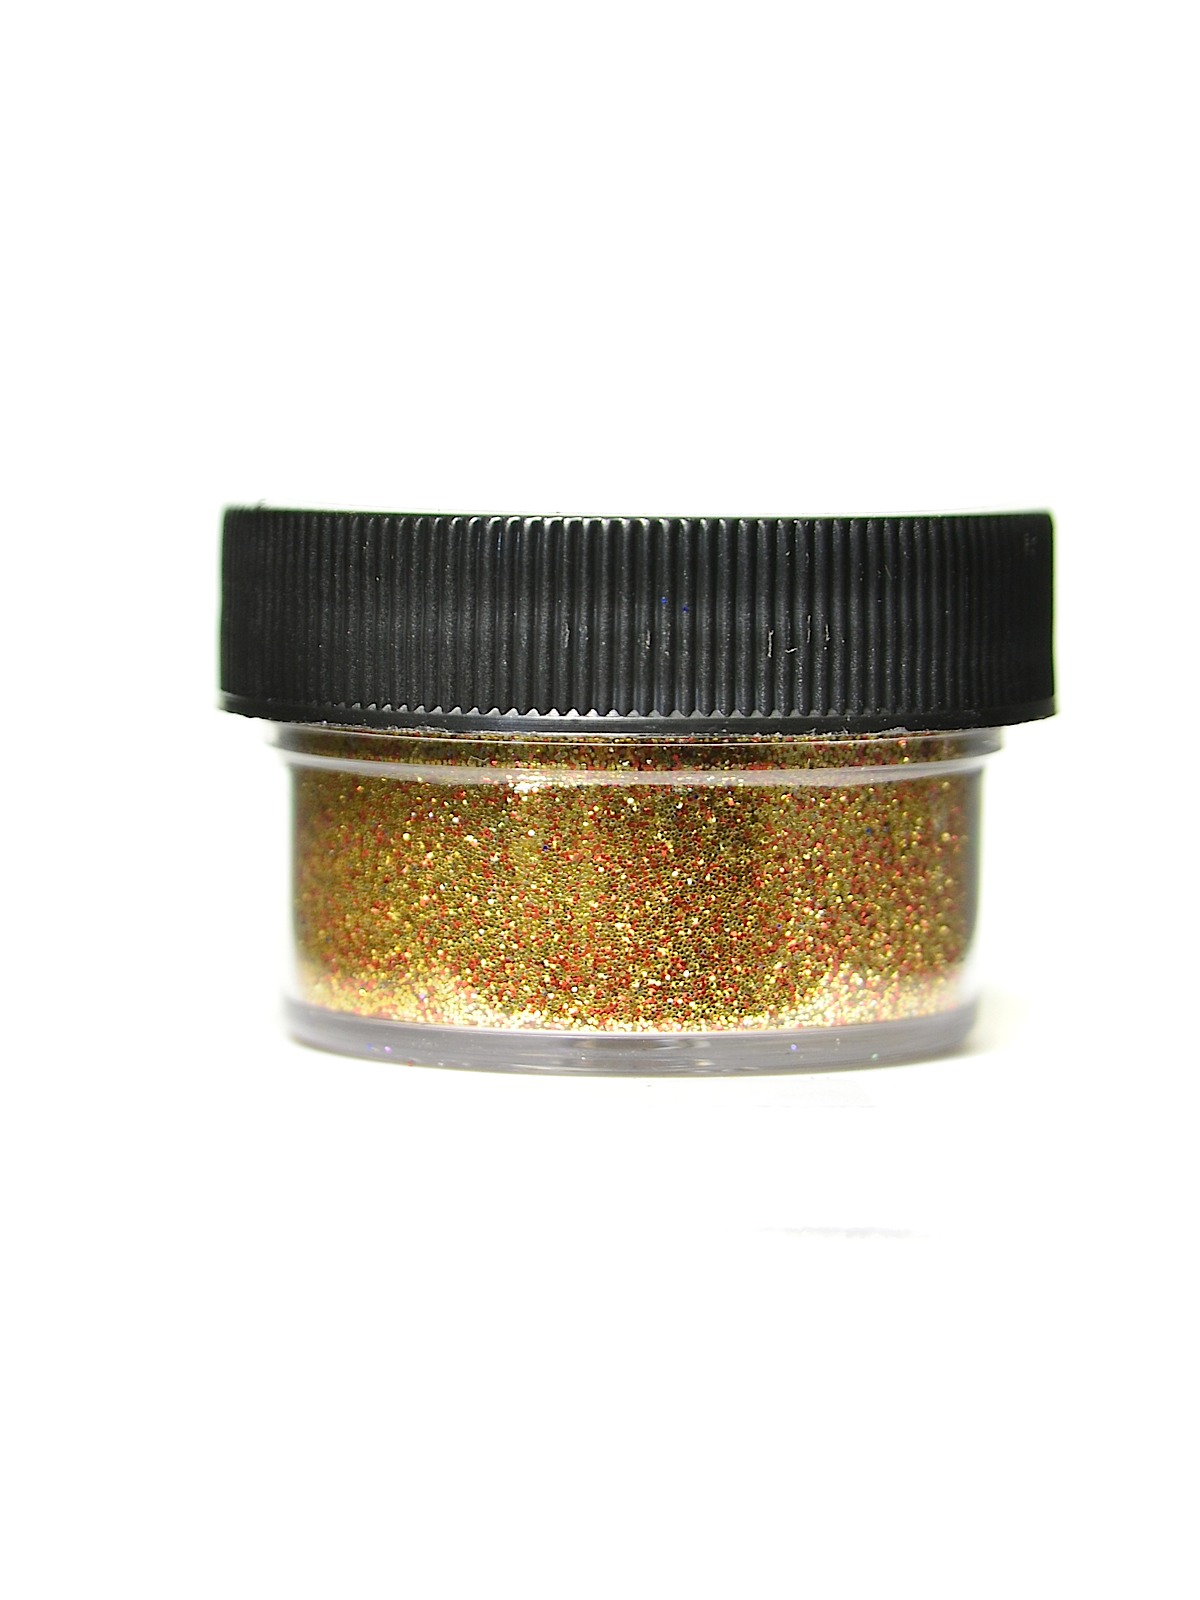 Ultrafine Opaque Glitter Old Gold 1 2 Oz. Jar